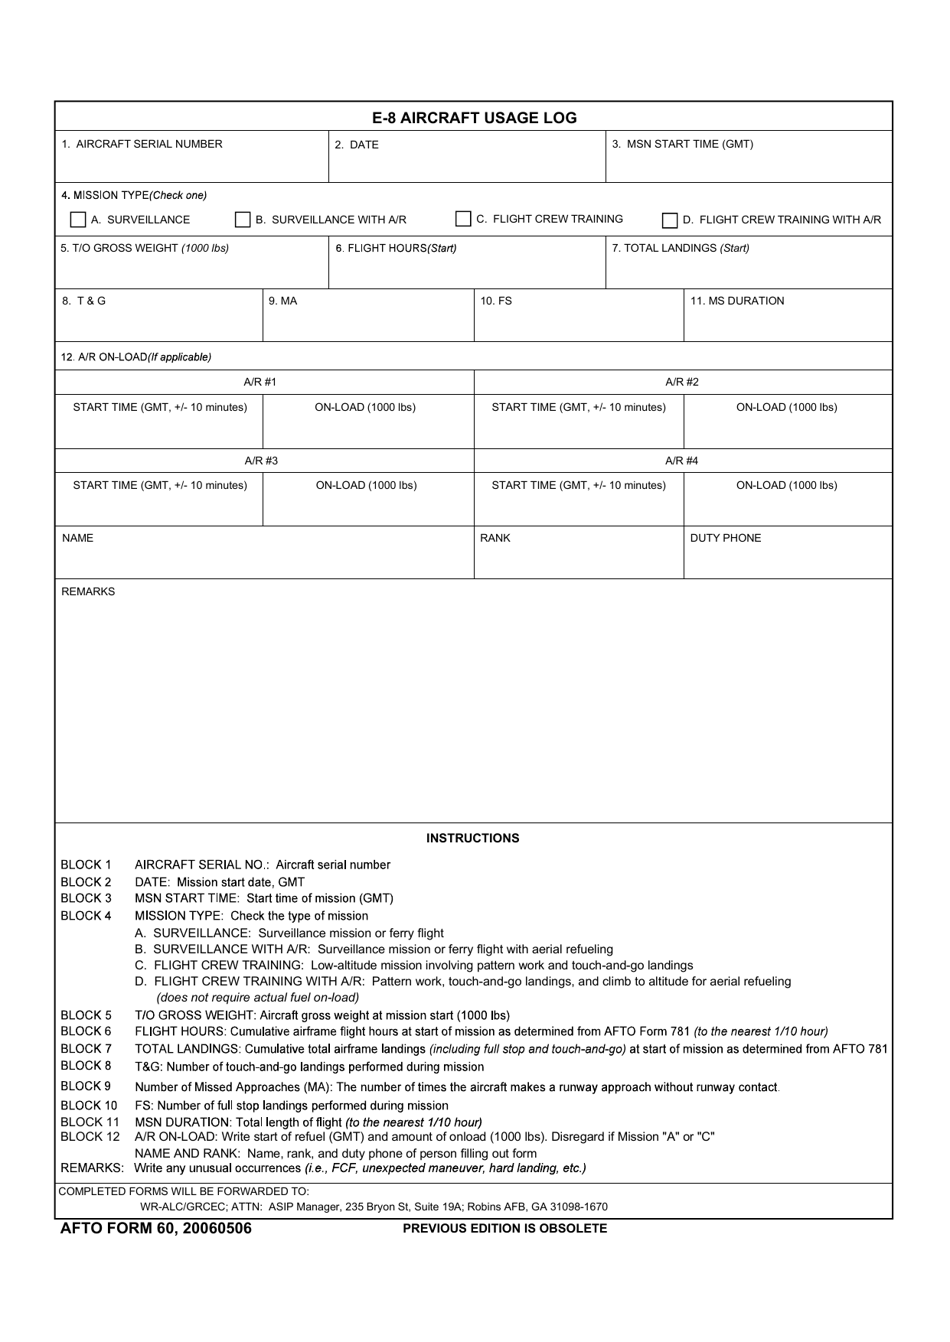 AFTO Form 60 Joint Start E-8 Aircraft Usage Log, Page 1